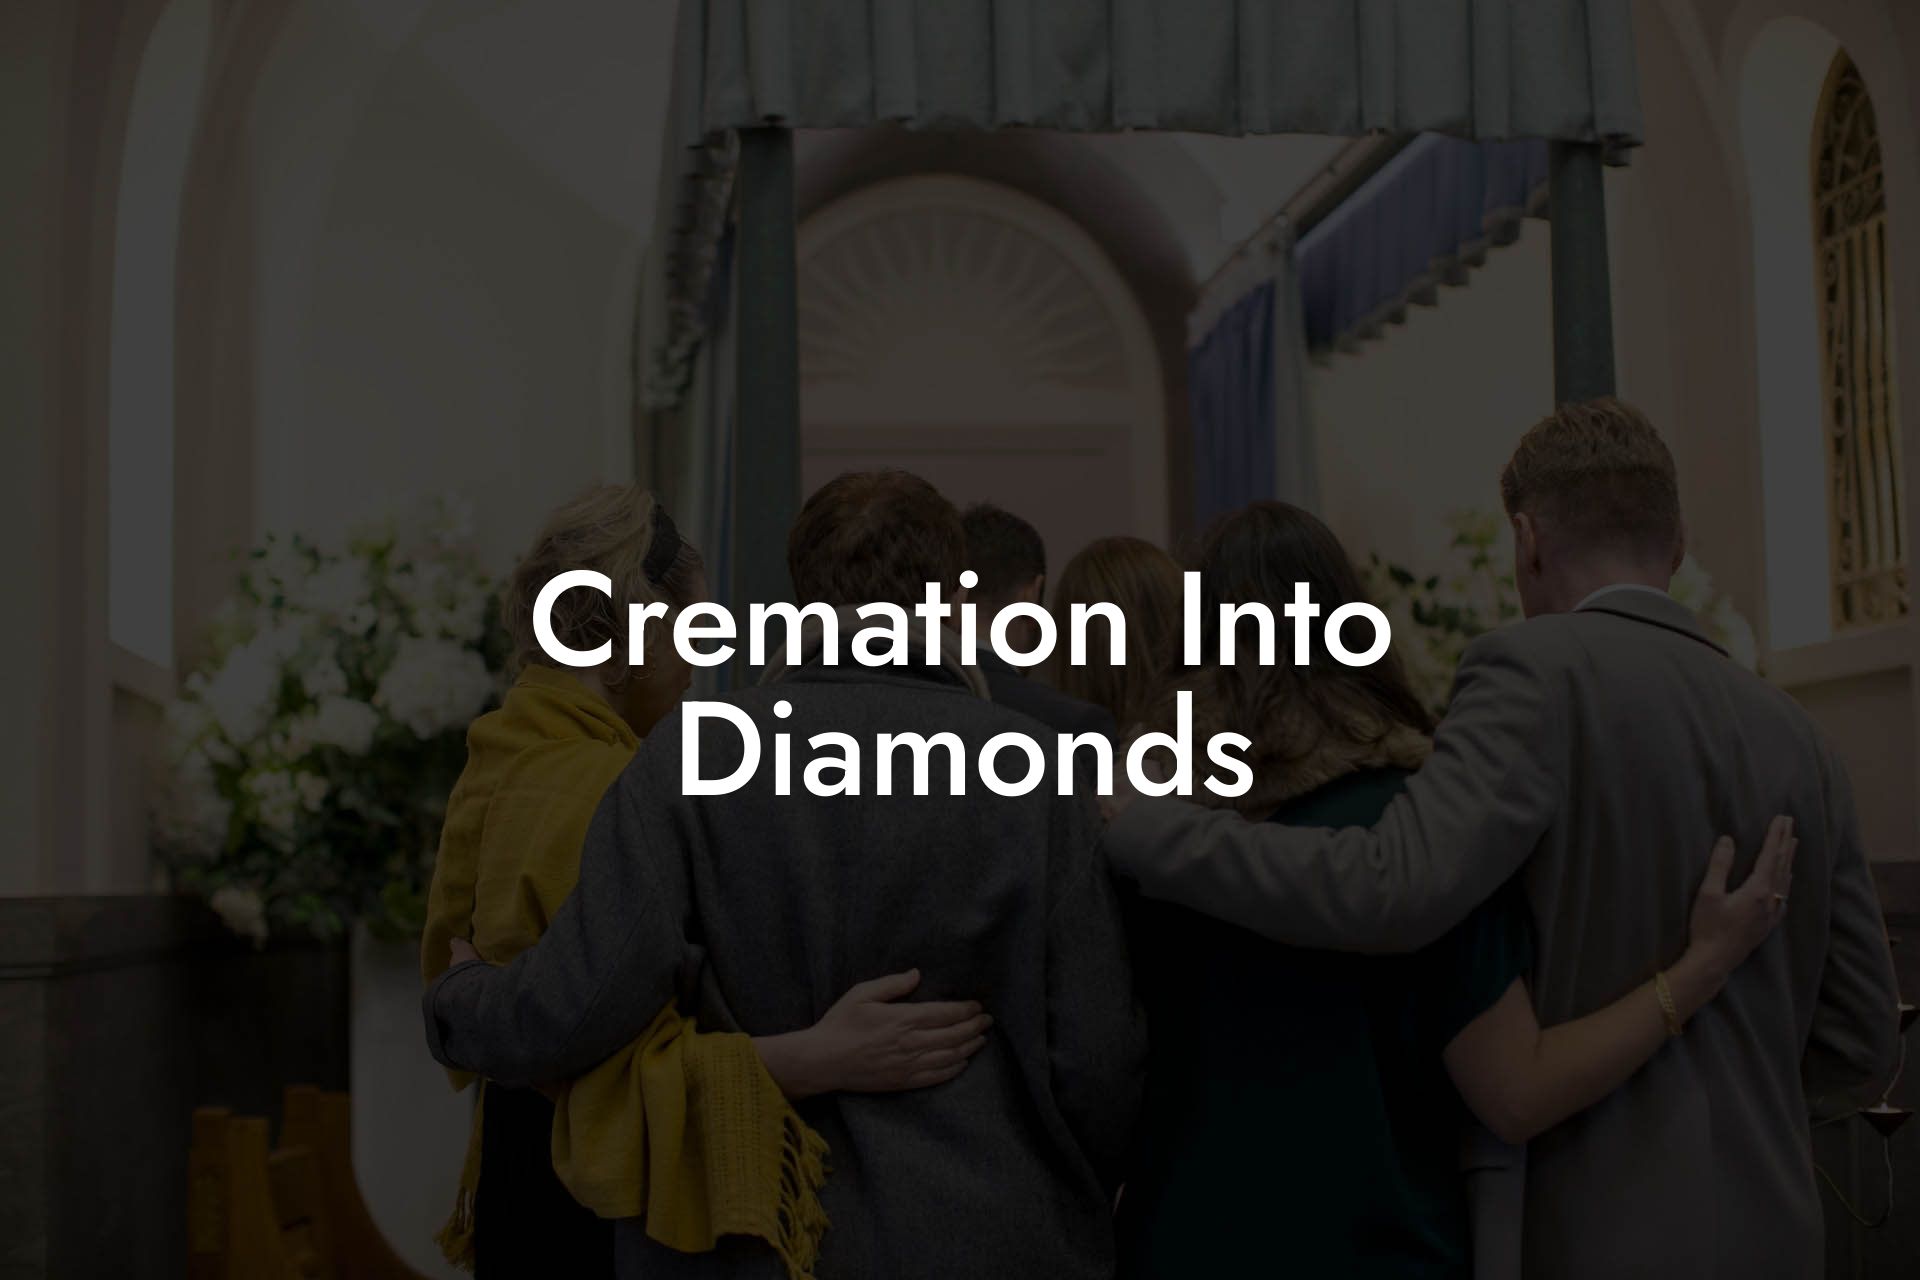 Cremation Into Diamonds